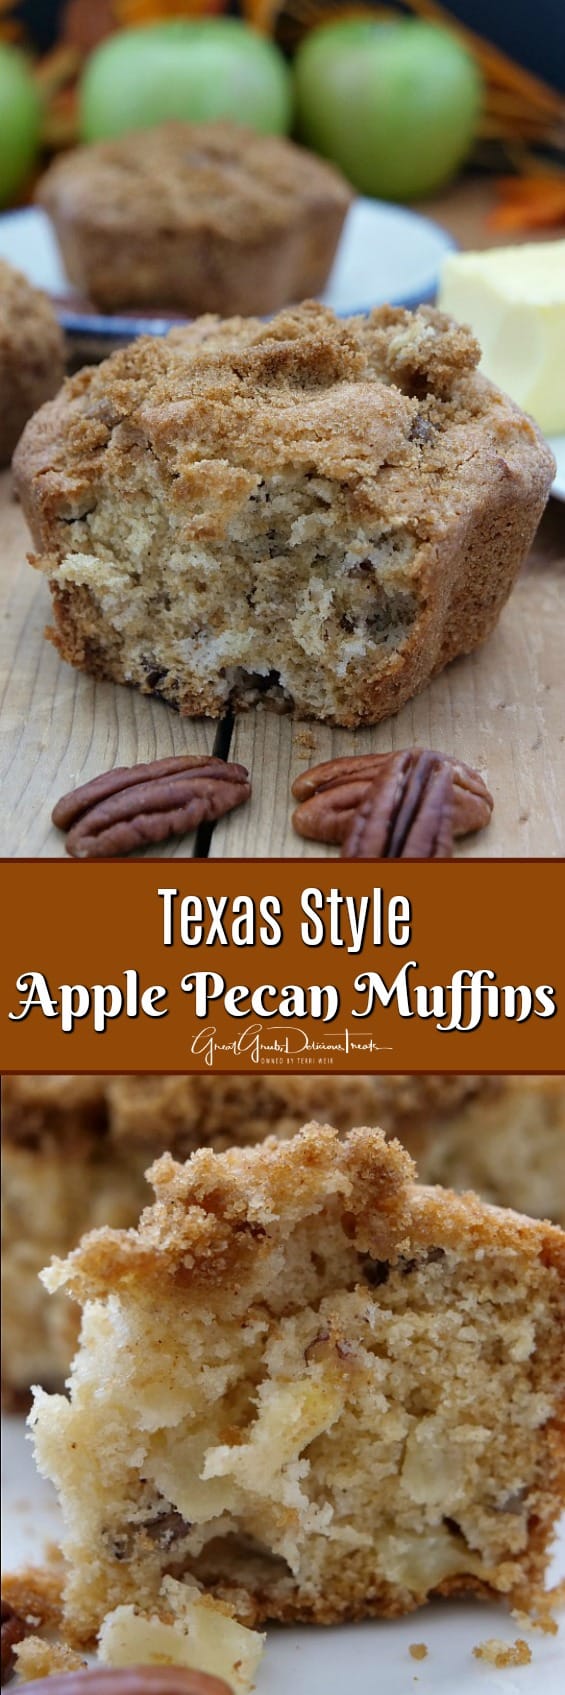 Texas Style Apple Pecan Muffins